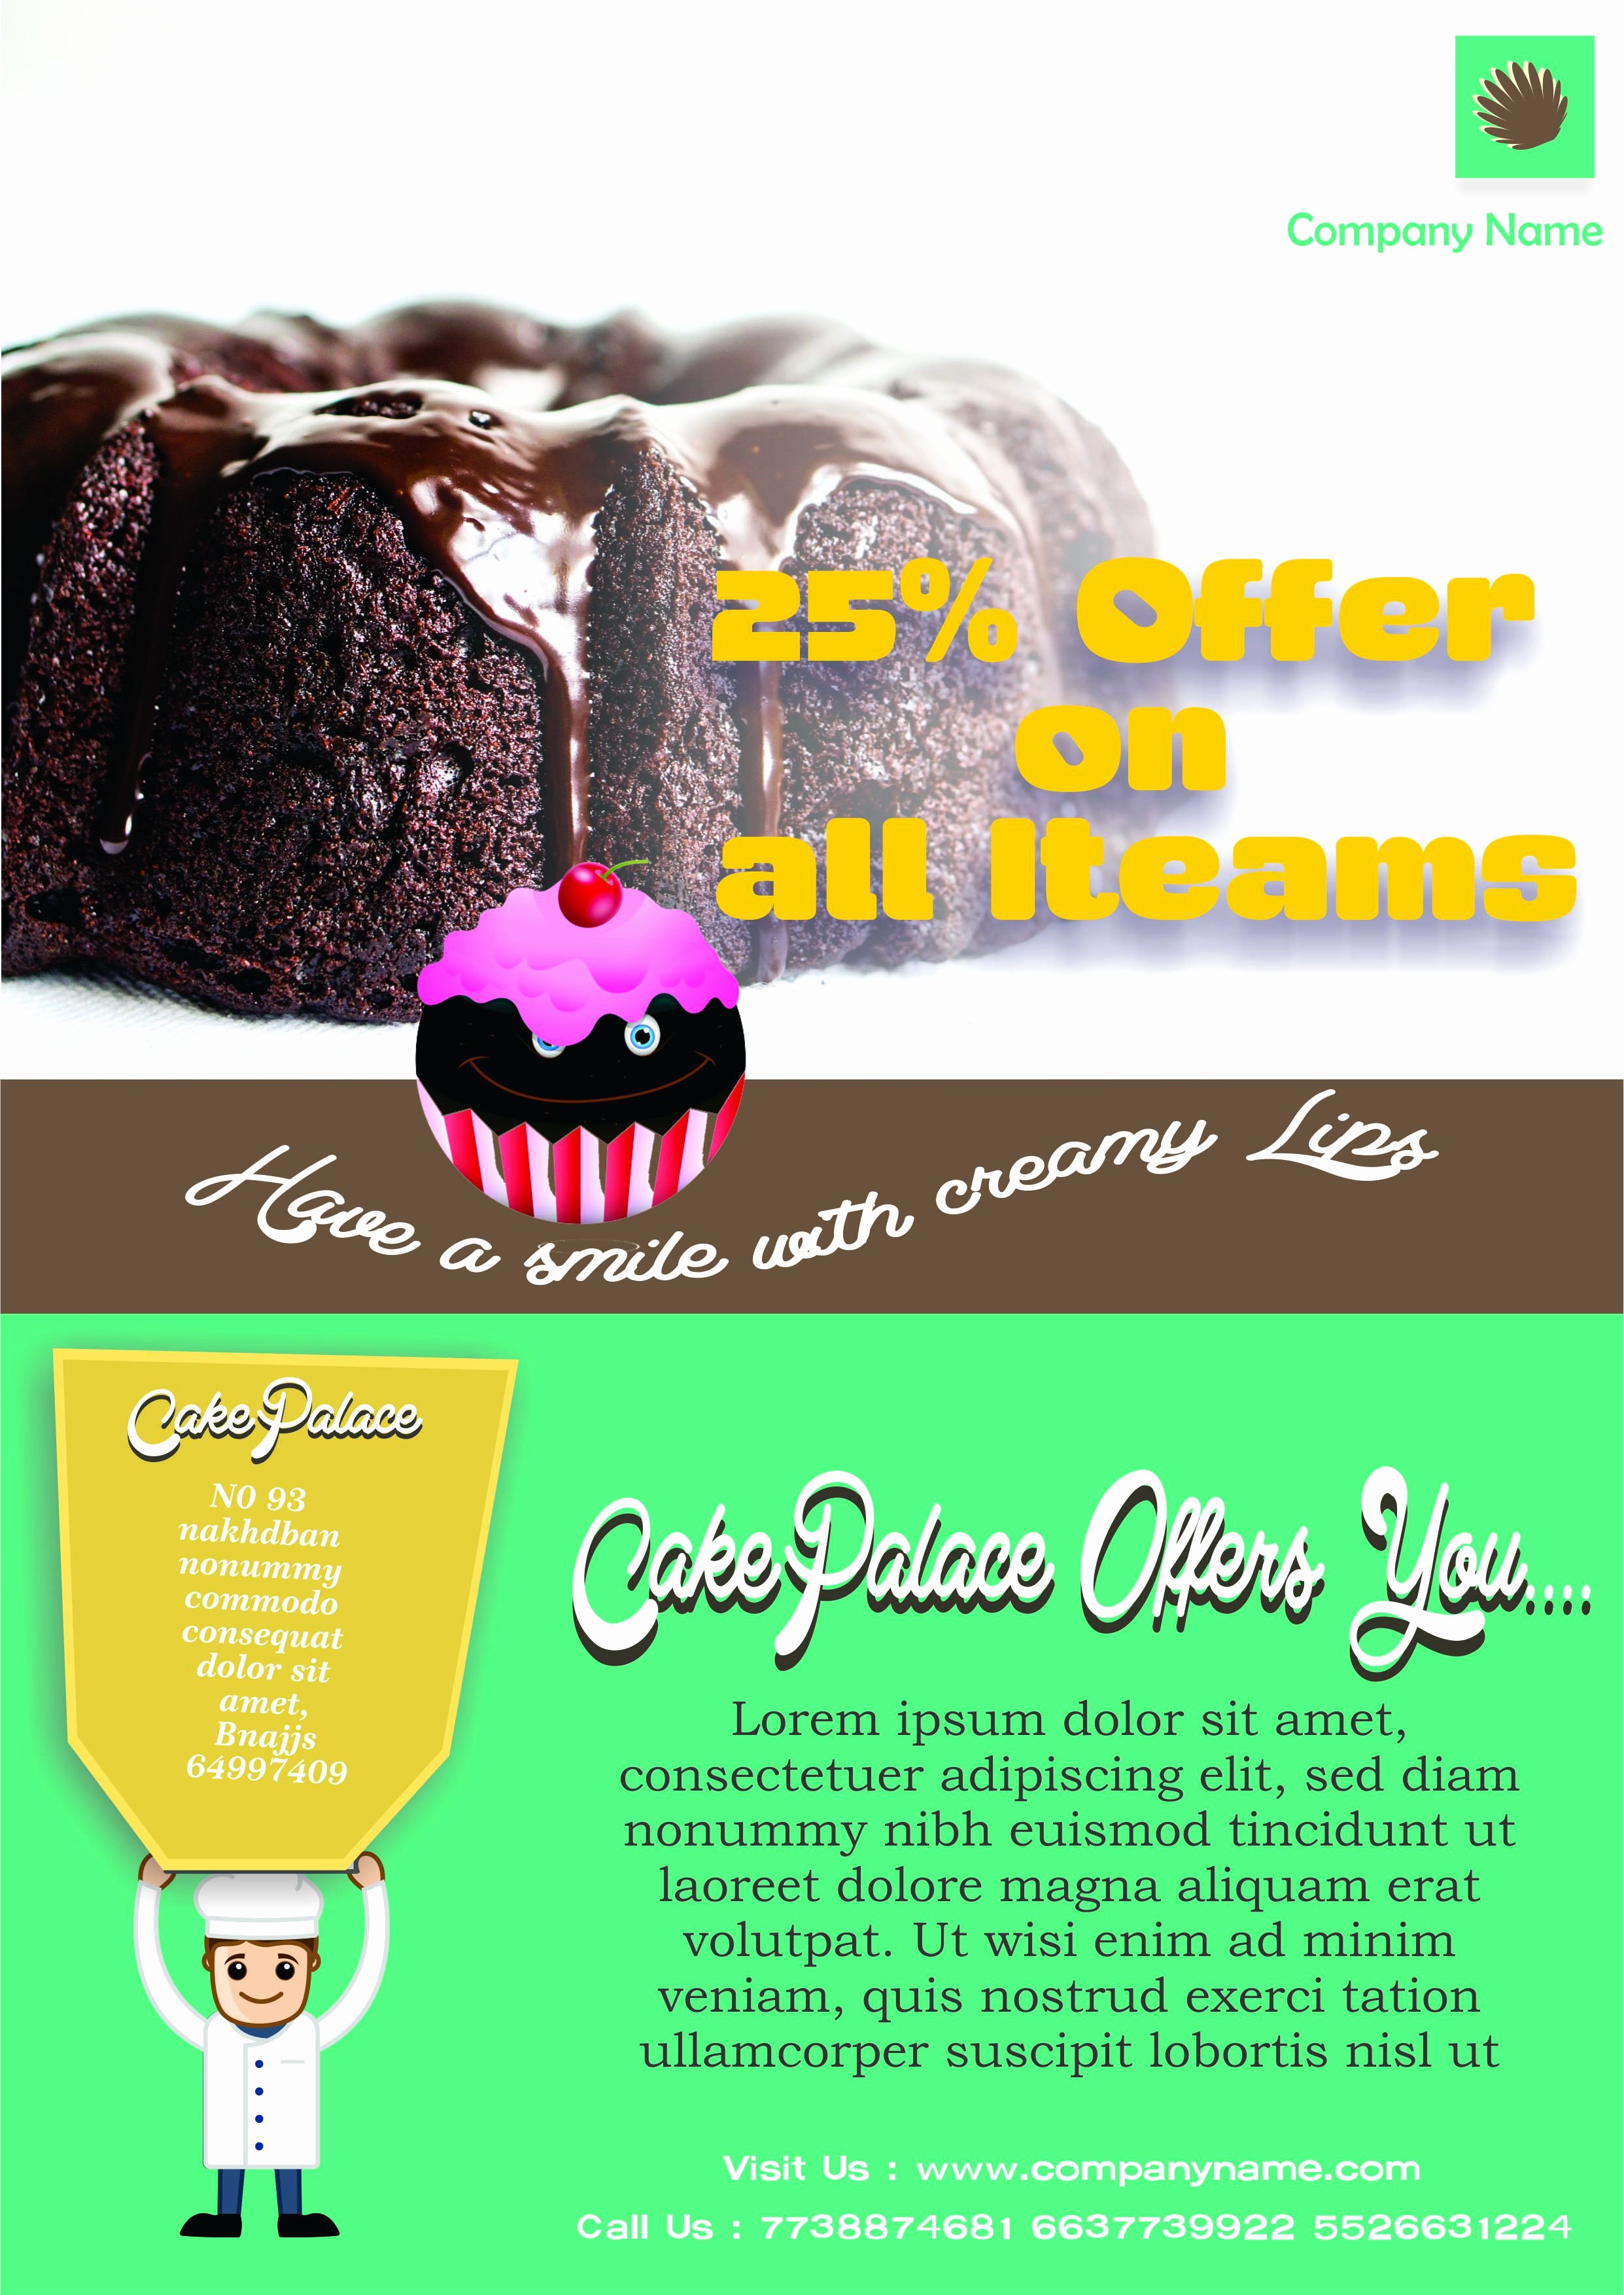 Bake Sale Flyer Template Luxury Engaging Free Bake Sale Flyer Templates for Fundraising